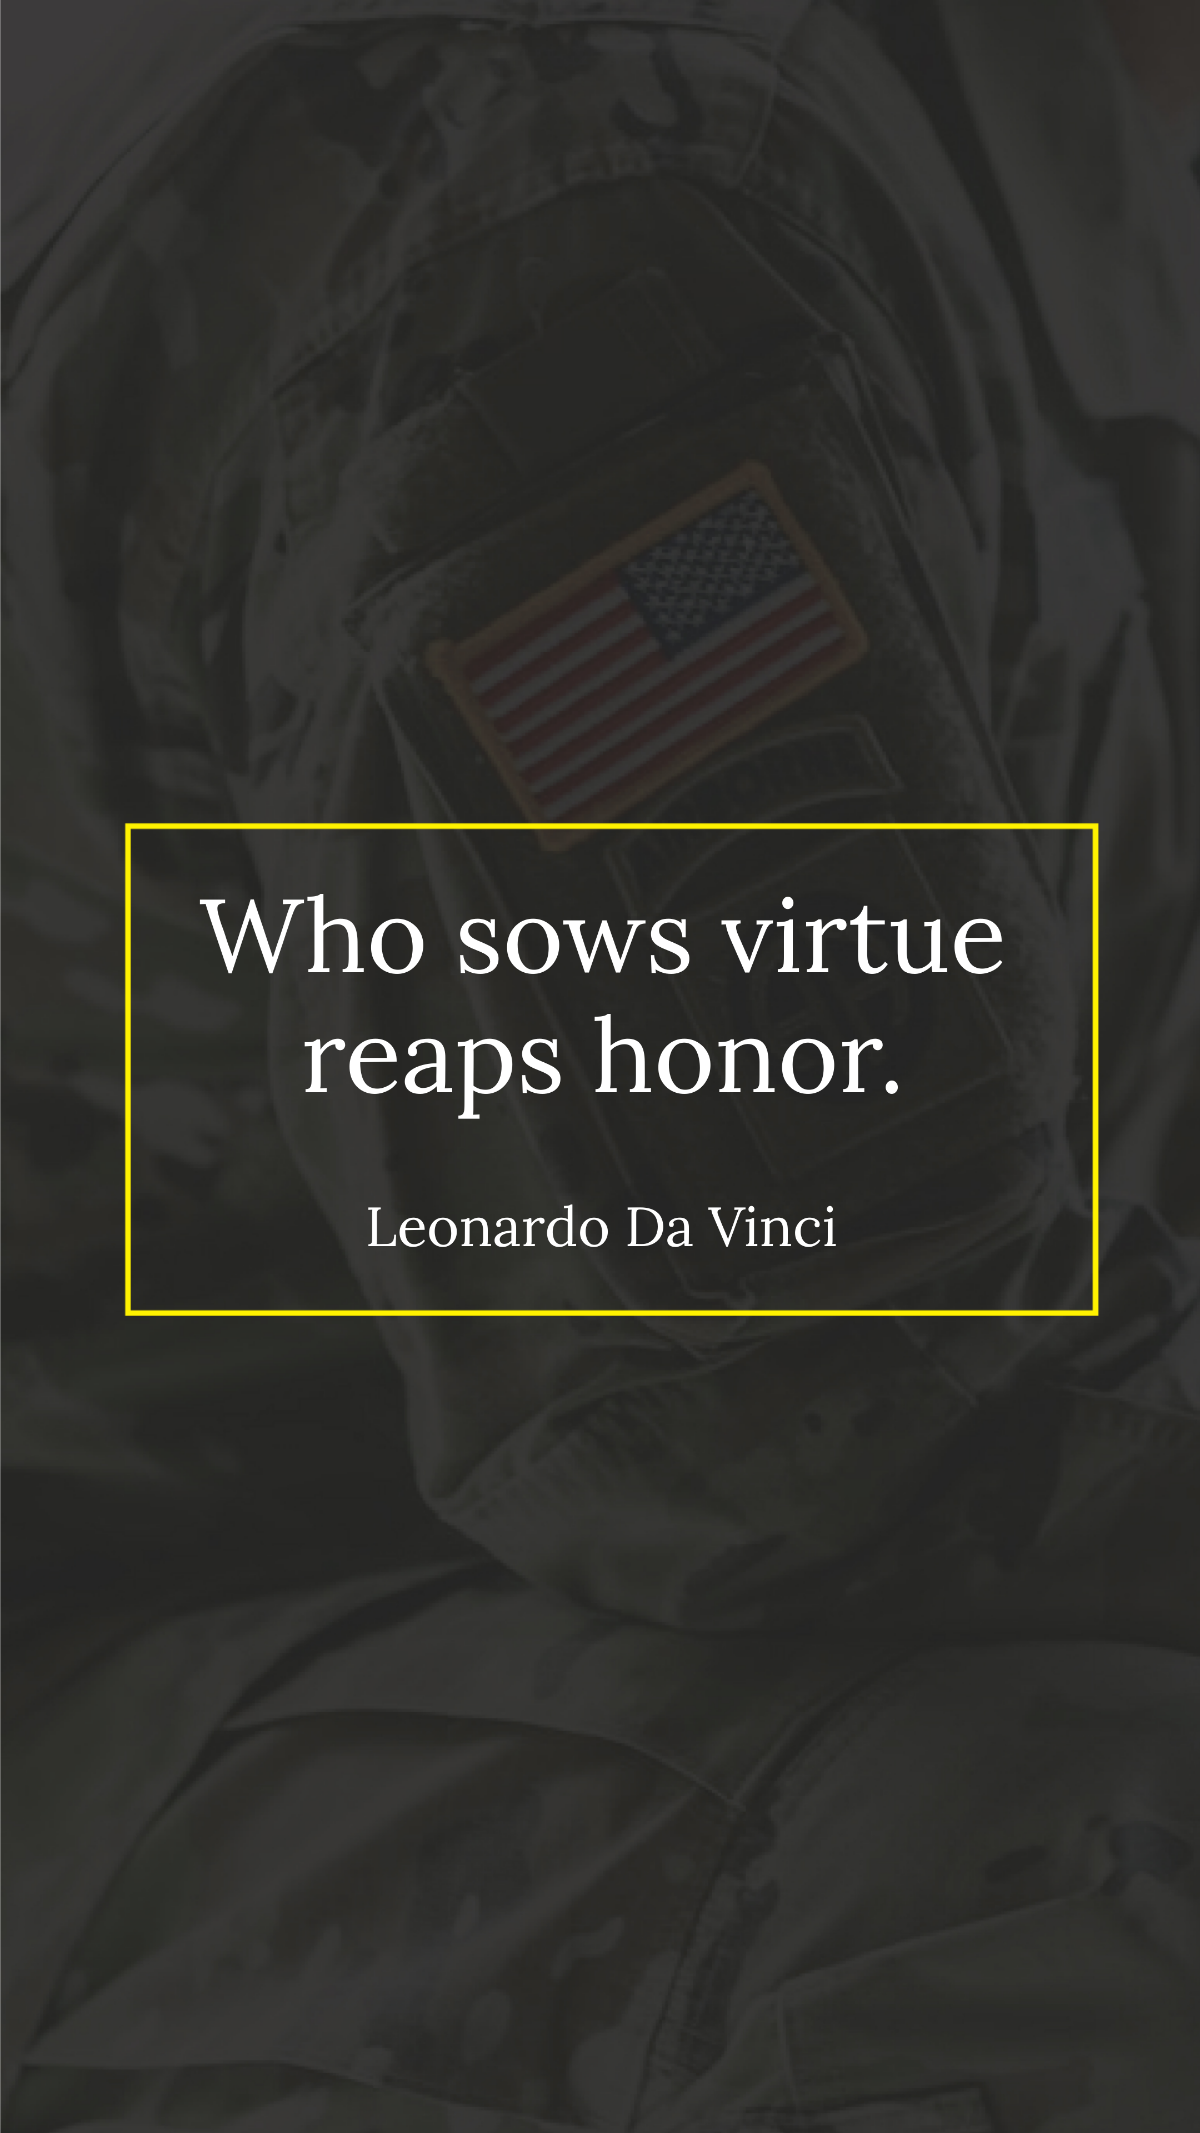 Leonardo da Vinci - Who sows virtue reaps honor. Template